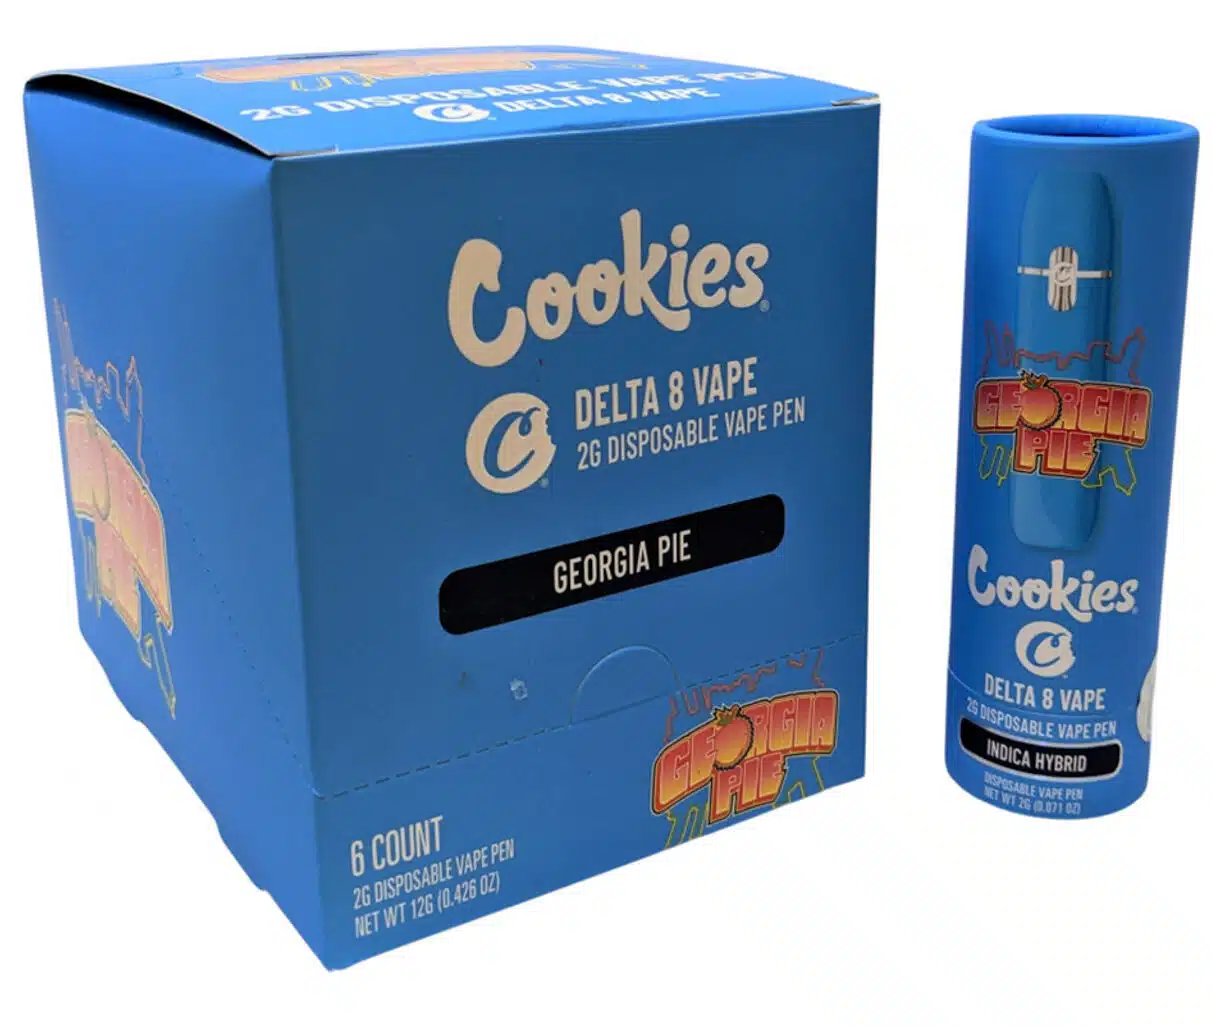 Cookies-2G-Delta-8-Disposable-Vape-Pen—Display-of-6—Georgia-Pie-Indica-Hybrid__23871